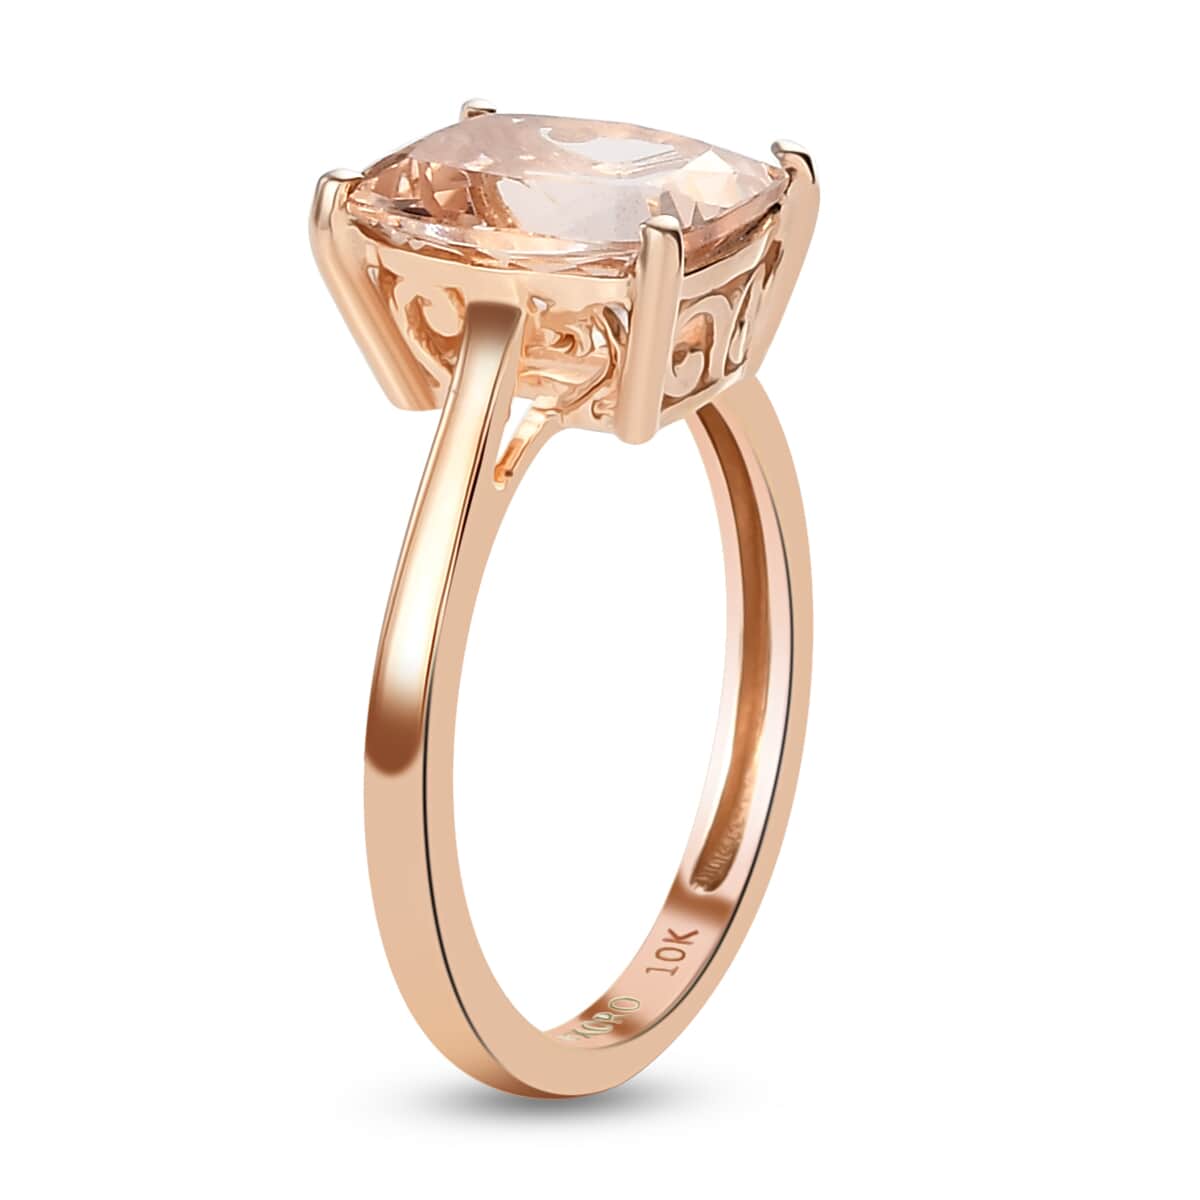 LUXORO 10K Rose Gold AAA Marropino Morganite Solitaire Ring (Size 10.0) 2.15 Grams 2.60 ctw image number 3